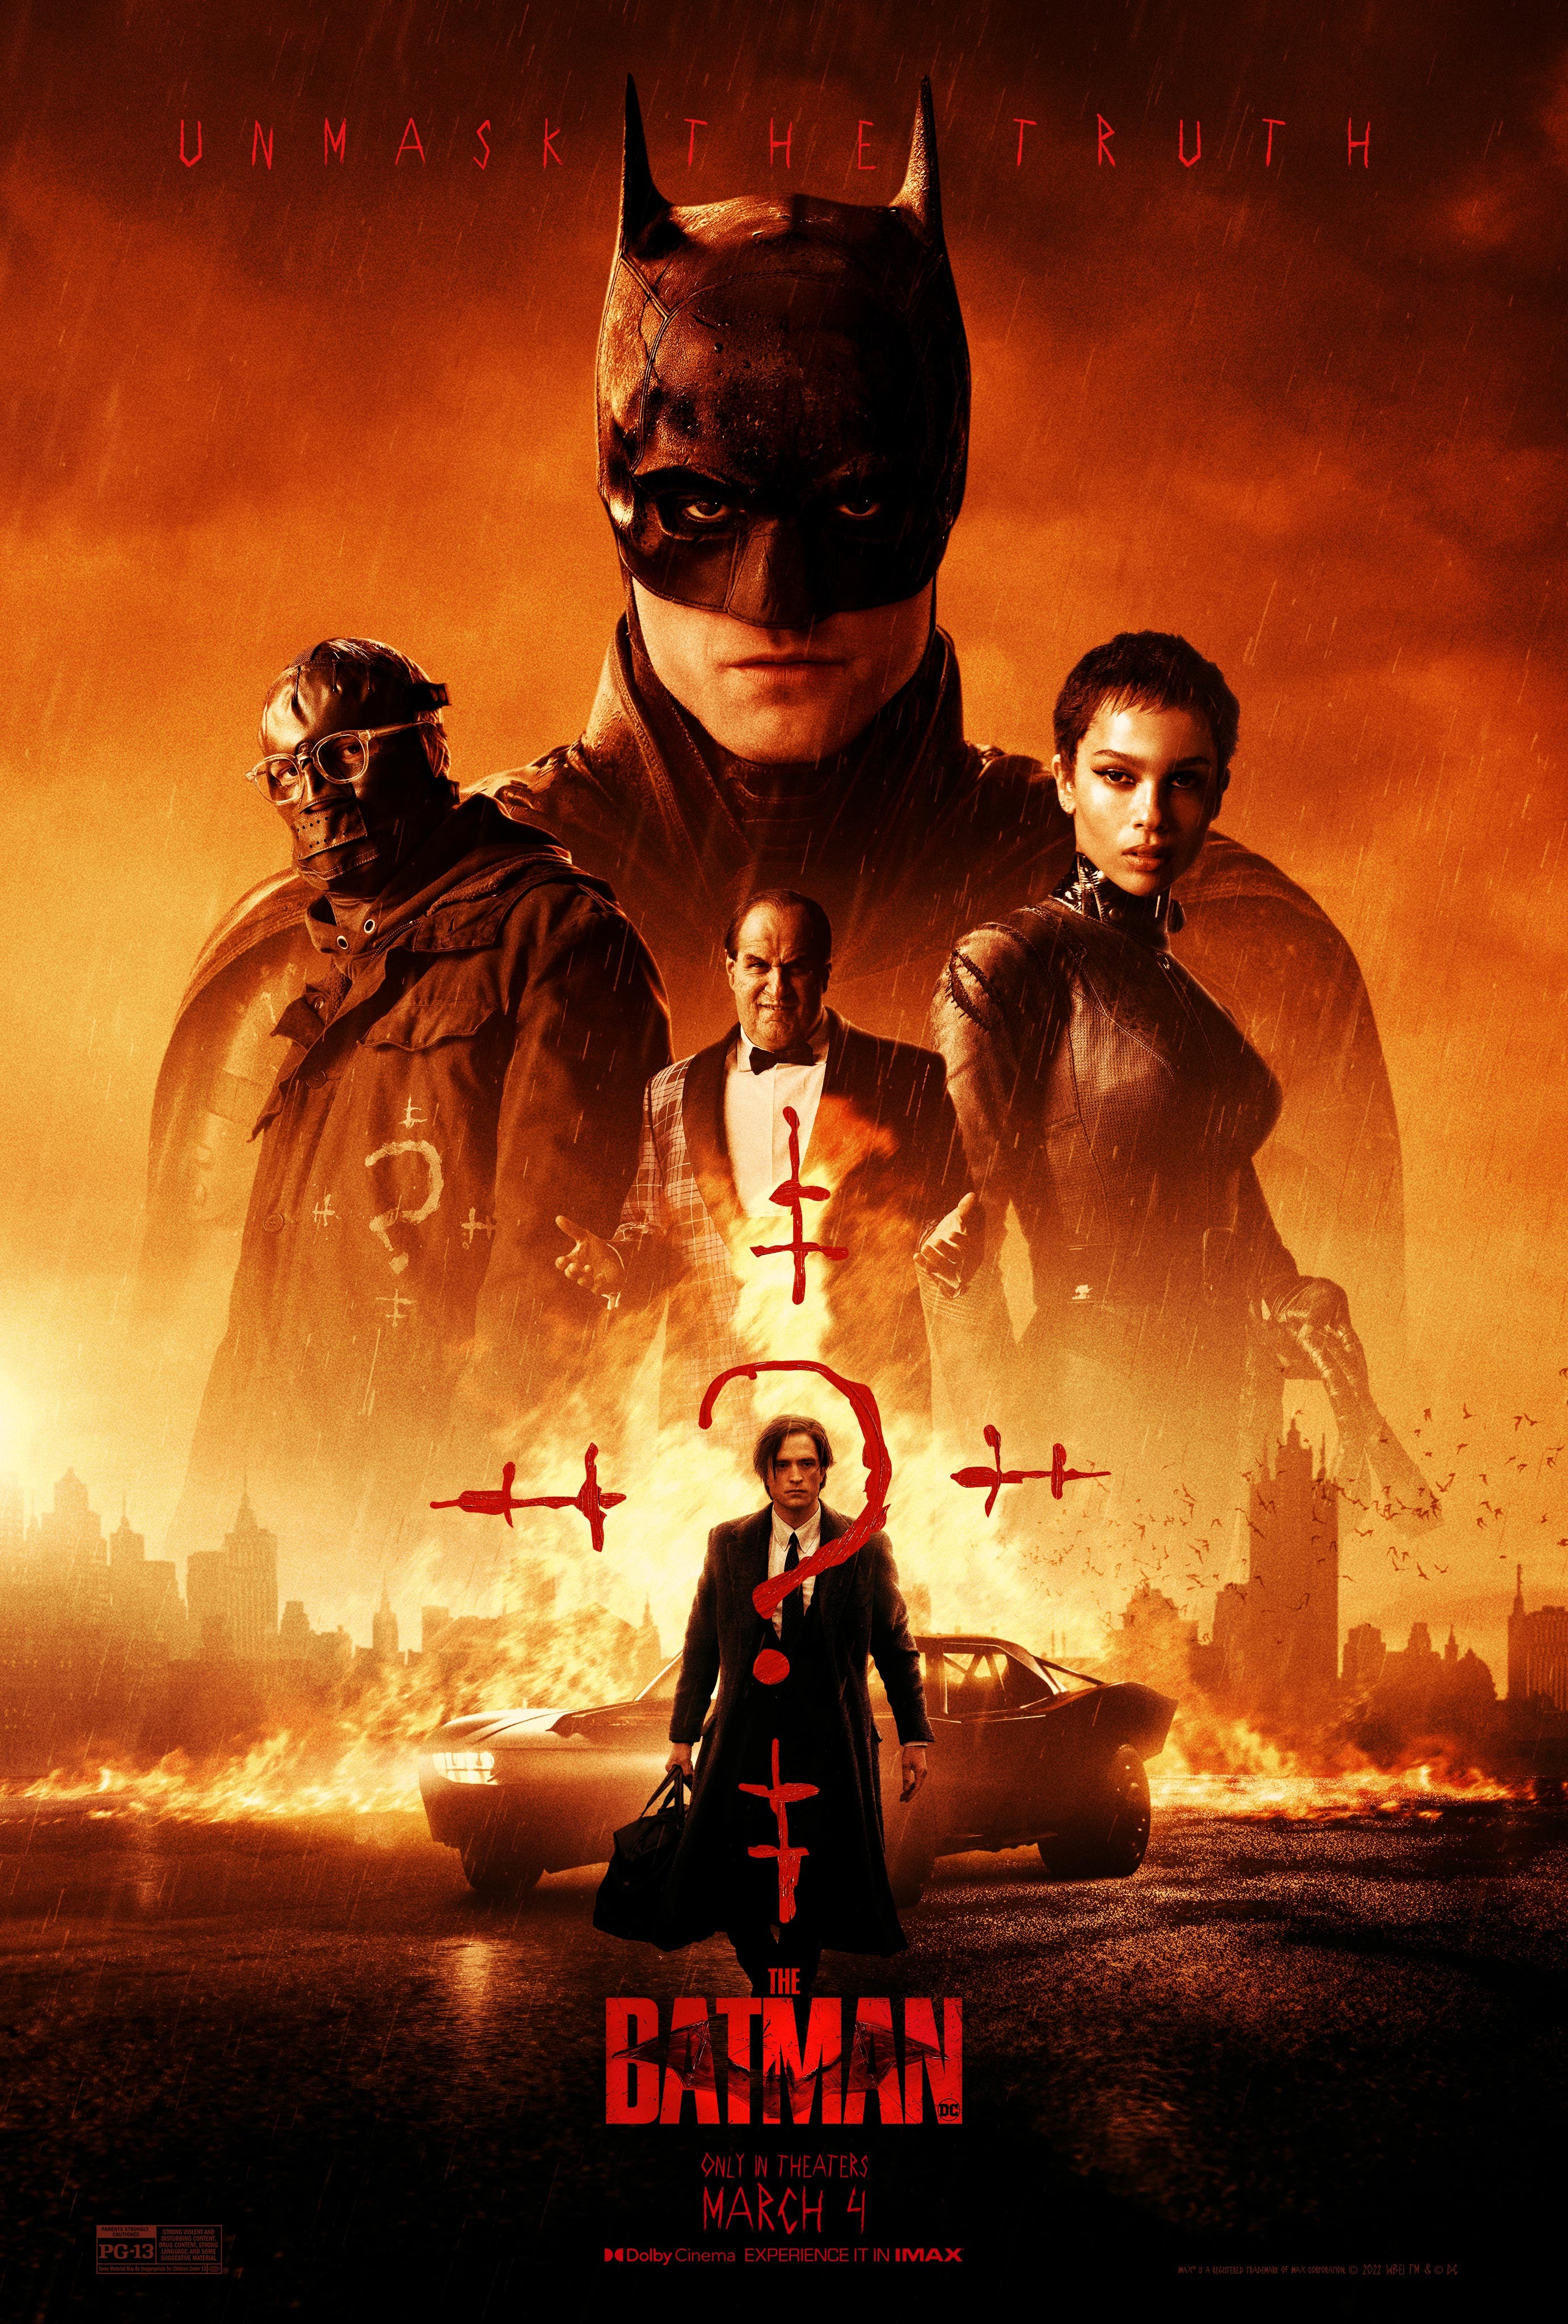 The Batman: Trailer 1 - Trailers & Videos - Rotten Tomatoes